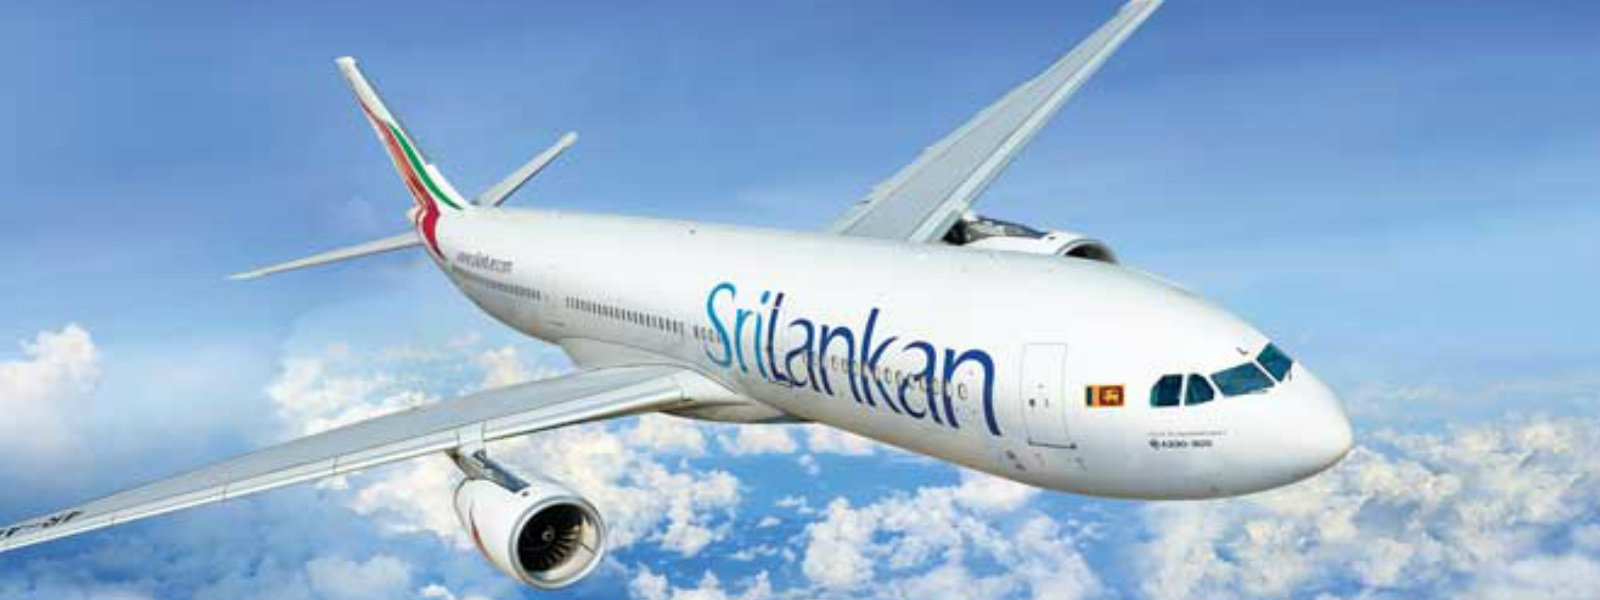 3 flights carrying 141 passengers arrives in SL 